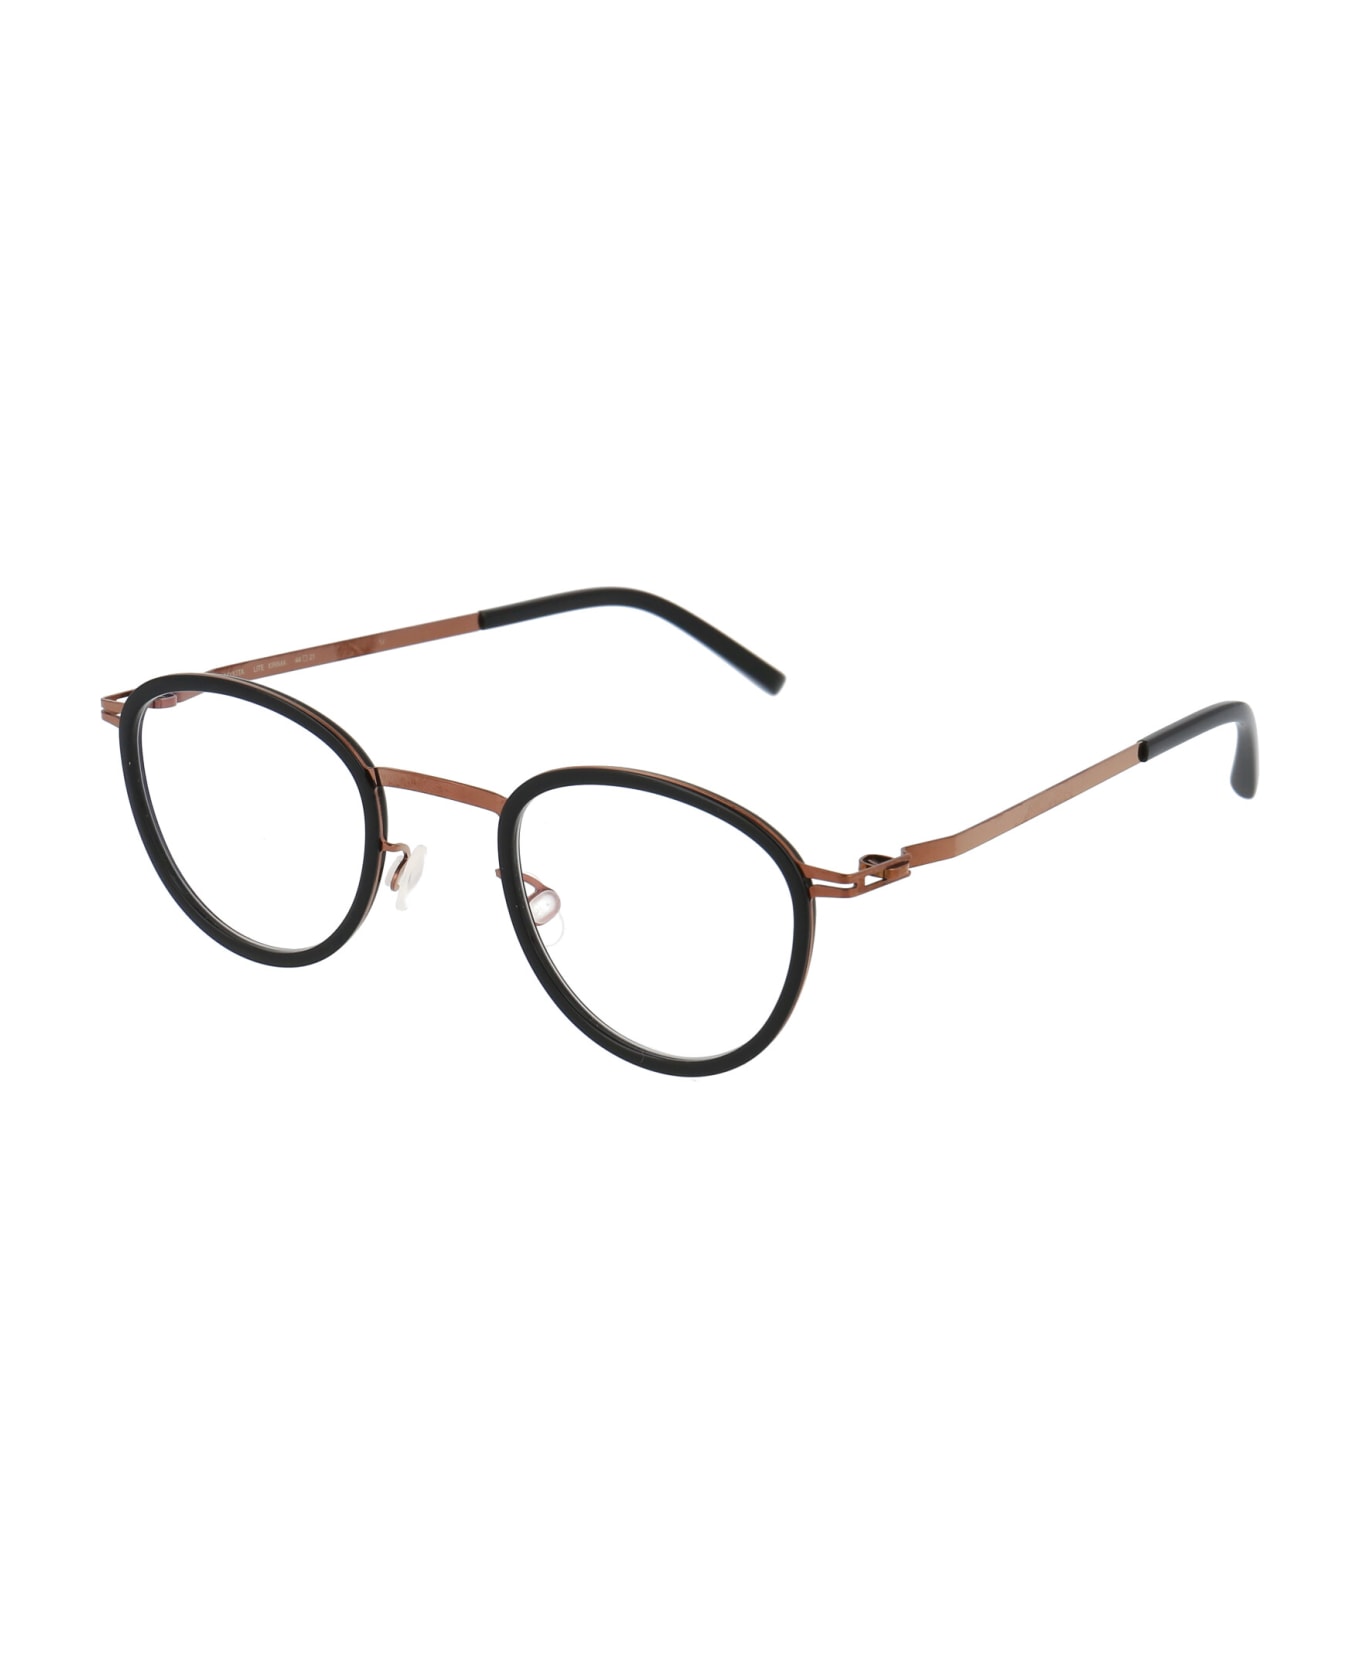 Mykita Kirima Glasses - 818 A37-Shiny Copper/Black Clear